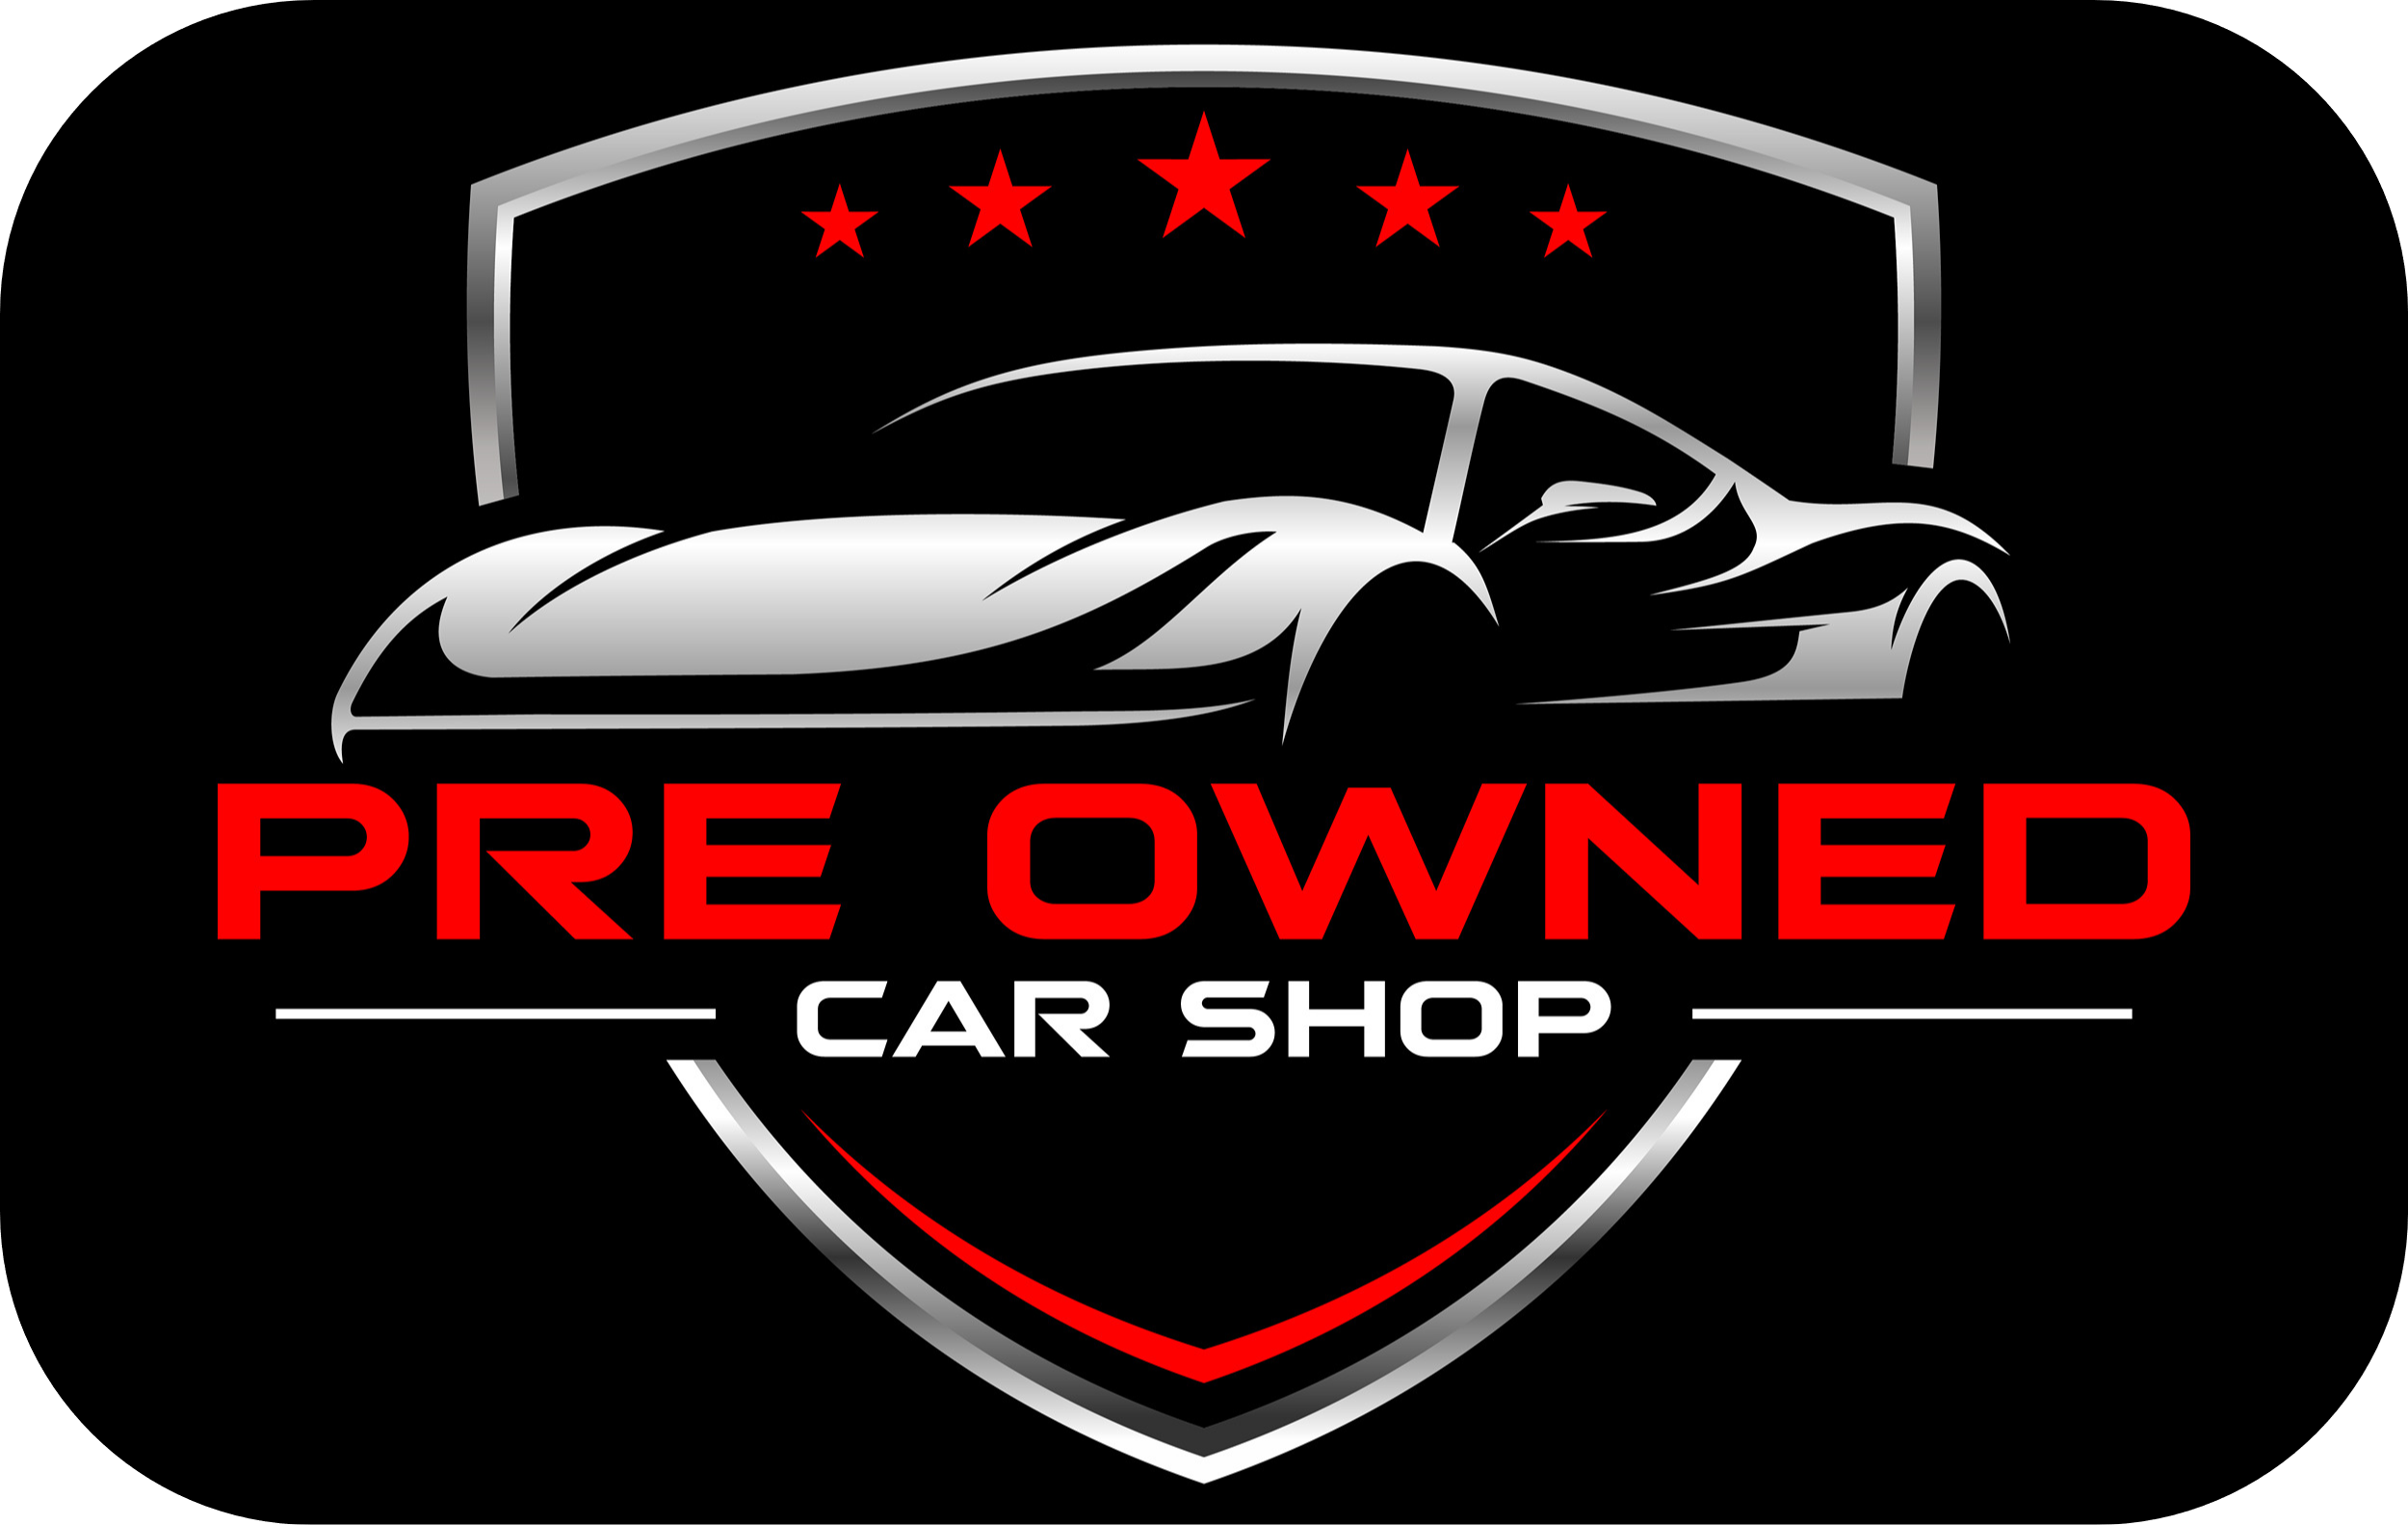 Pre Owned Car Shop logo